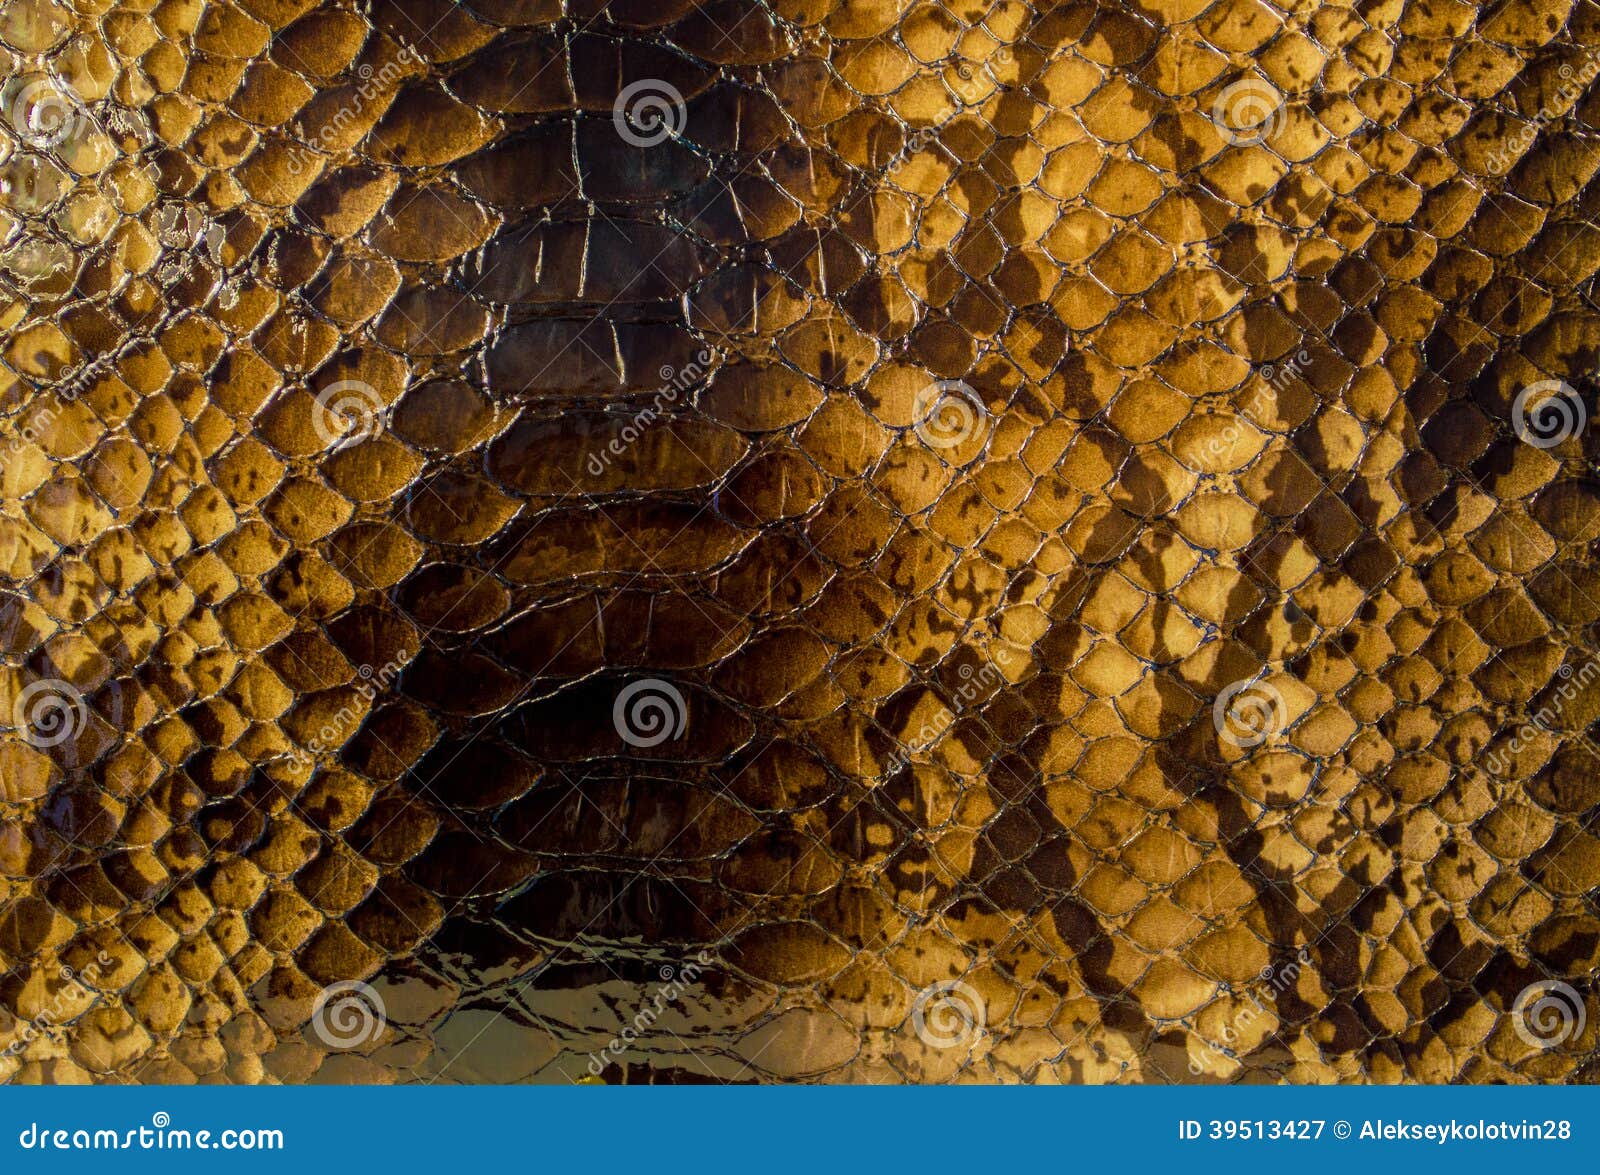 reptile skin pattern background